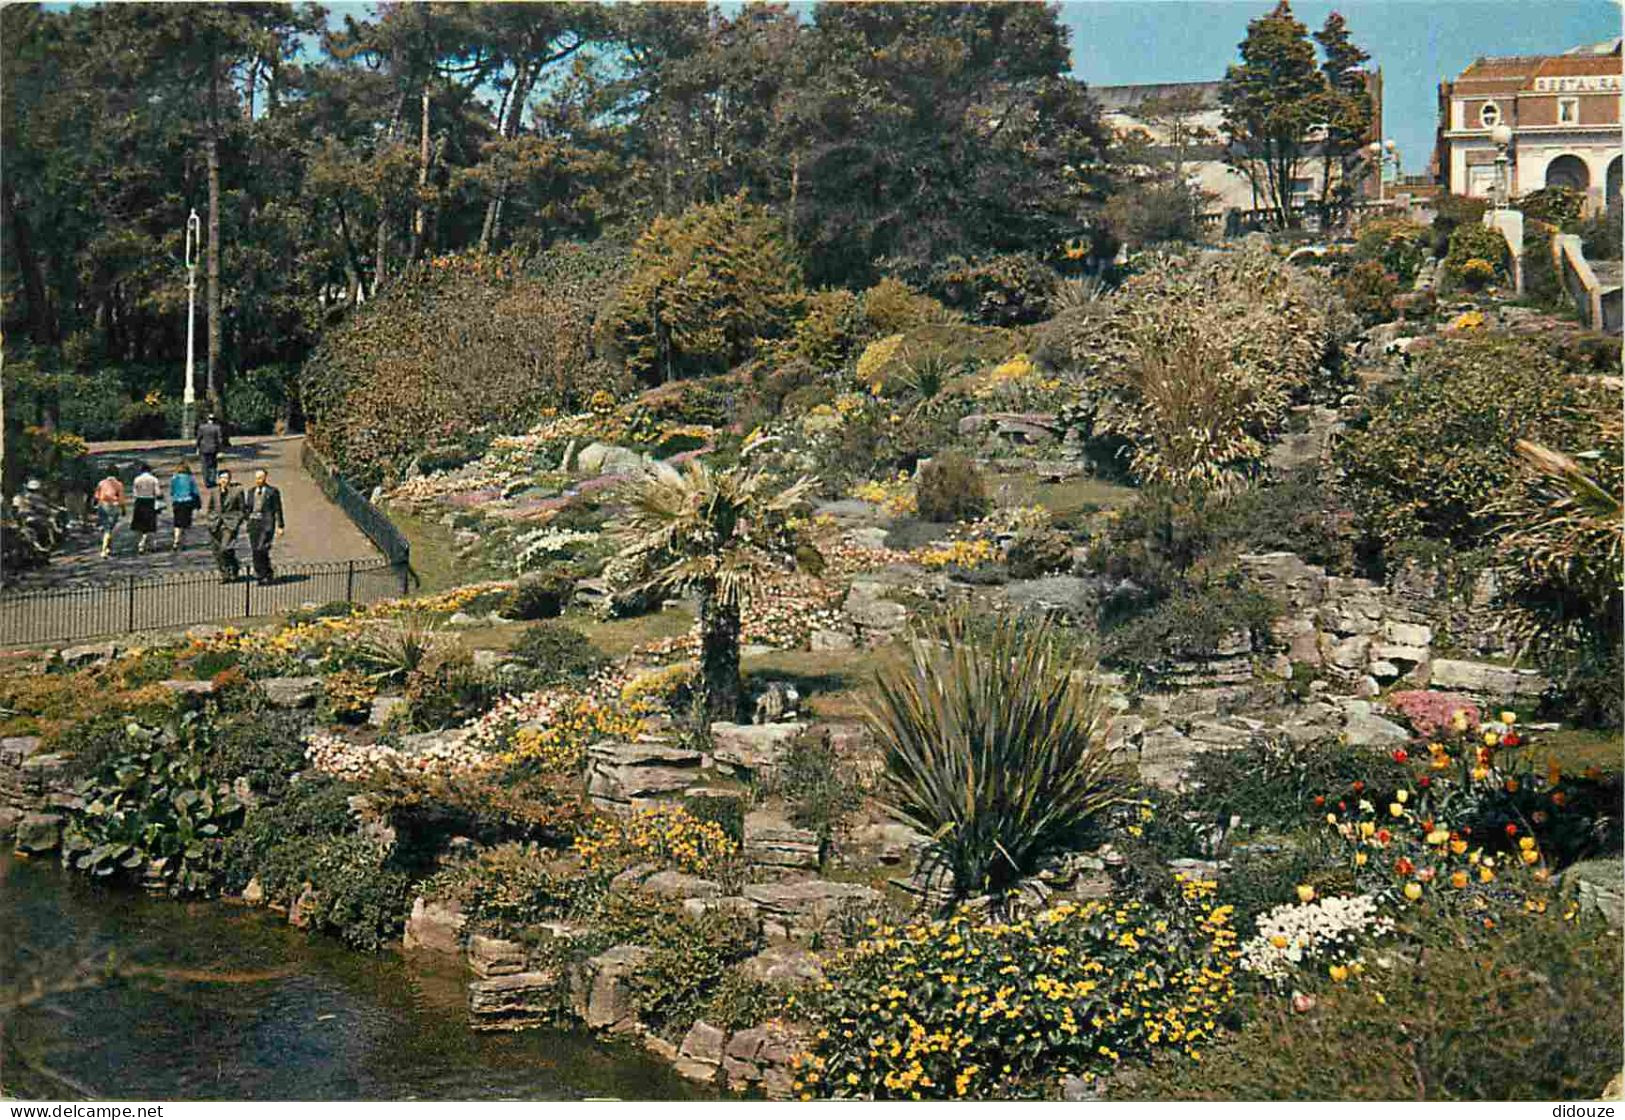 Angleterre - Bournemouth - Lower Gardens - Rock Garden - Jardins - Hampshire - England - Royaume Uni - UK - United Kingd - Bournemouth (until 1972)